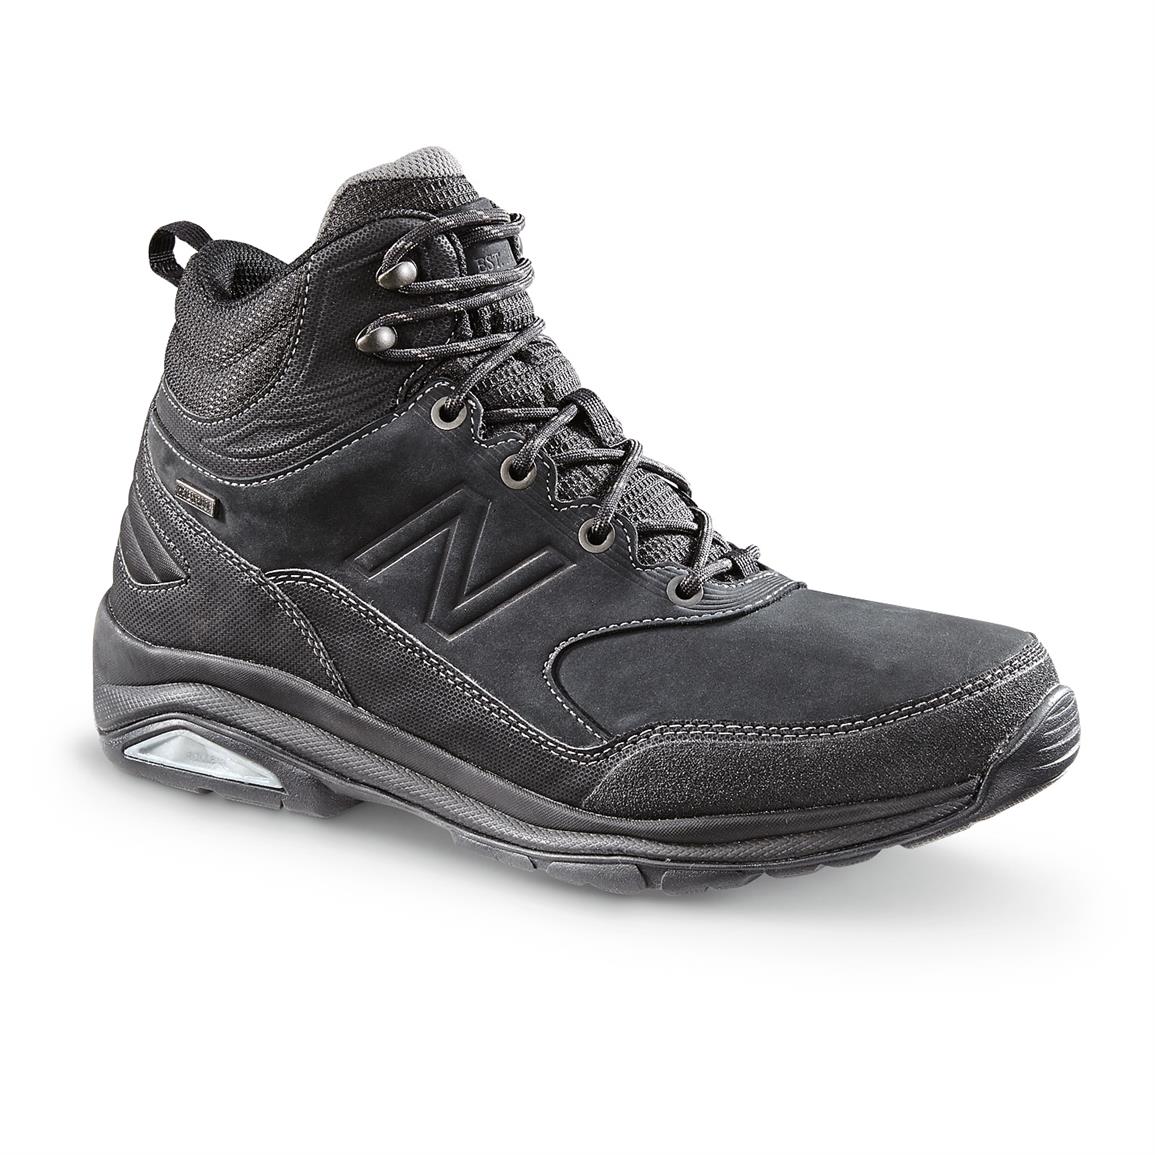 New Balance 1400v1 Hiking Boots, Waterproof, Insulated - 649027, Hiking ...